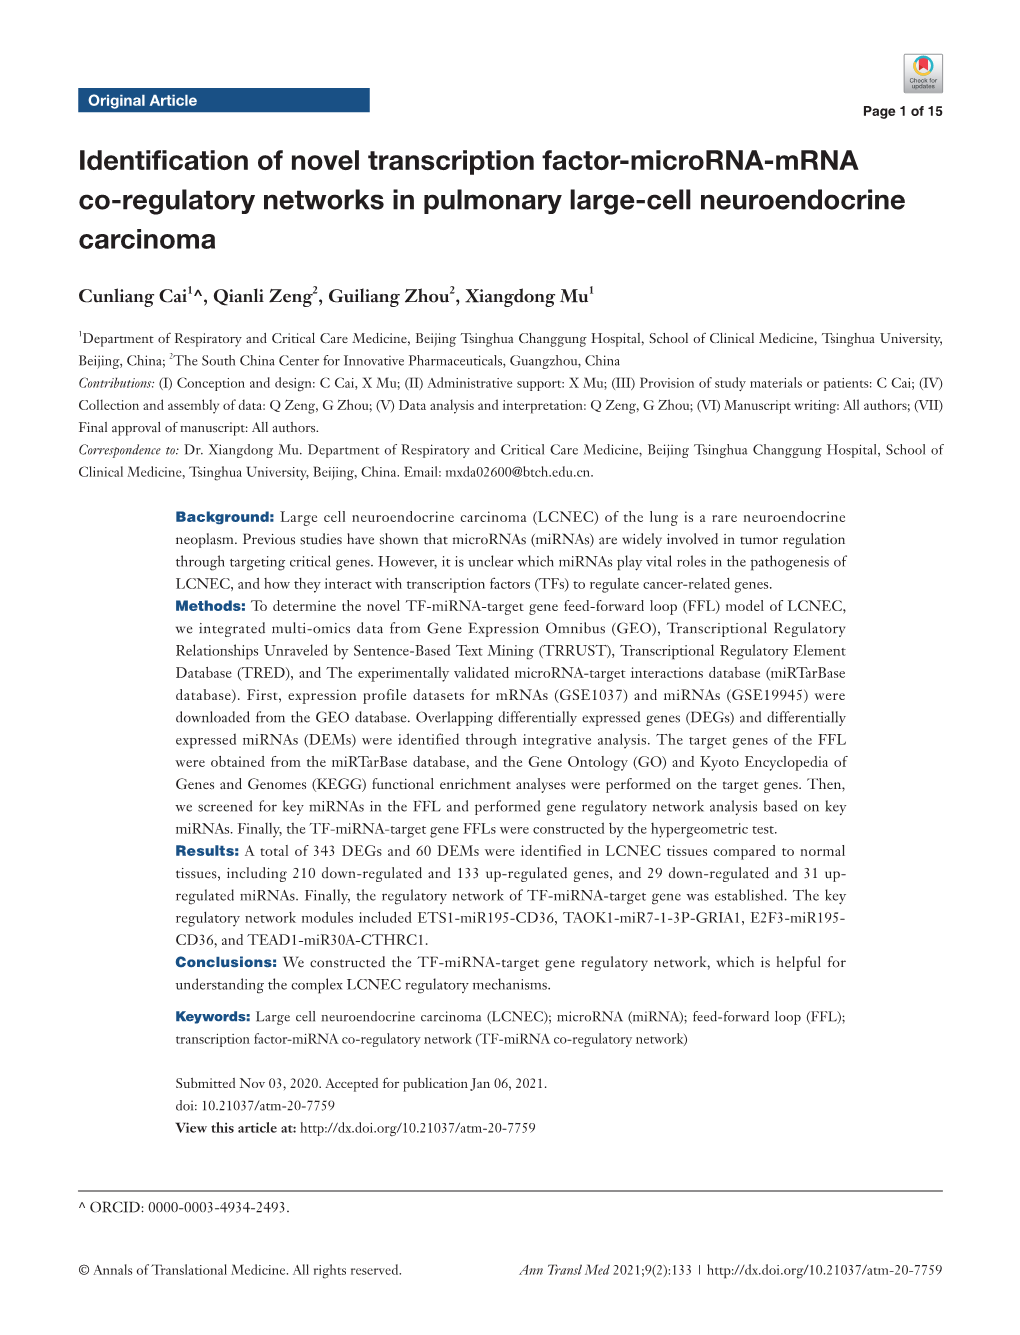 Identification of Novel Transcription Factor-Microrna-Mrna Co-Regulatory Networks in Pulmonary Large-Cell Neuroendocrine Carcinoma